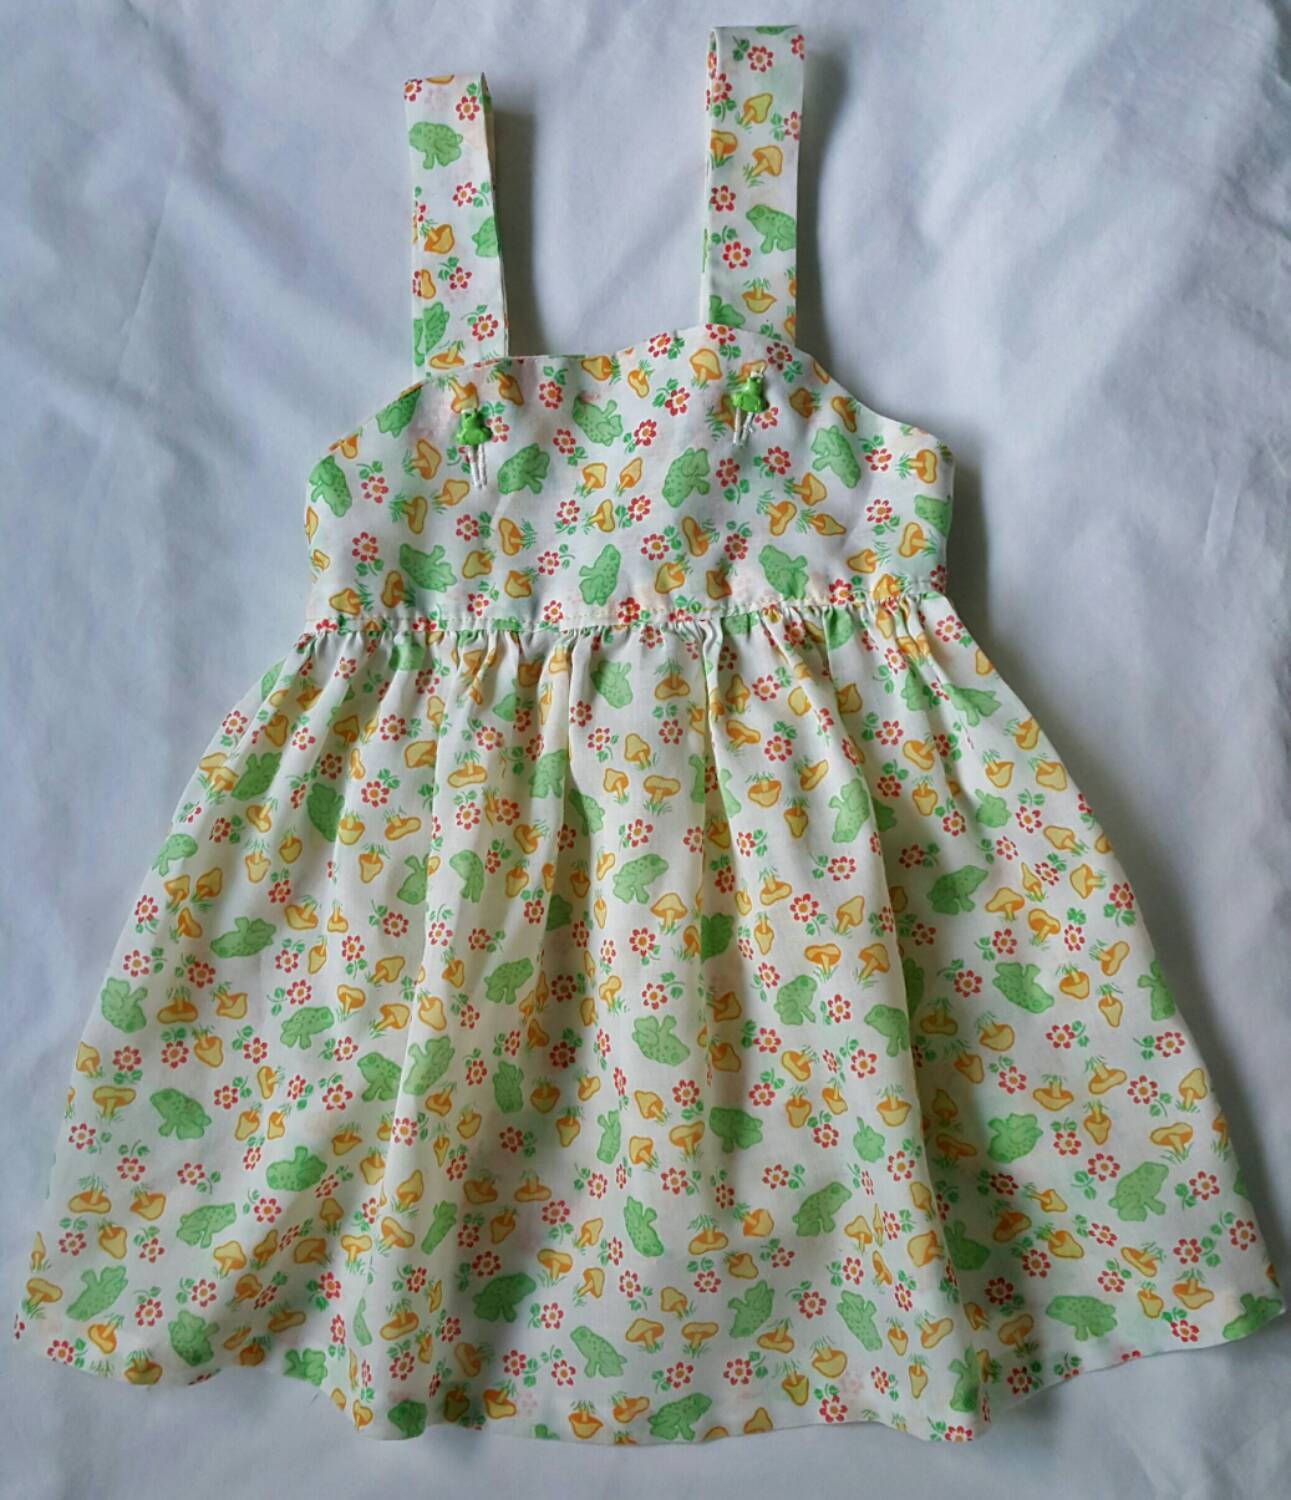 Vintage Baby Dress sz 12-18m